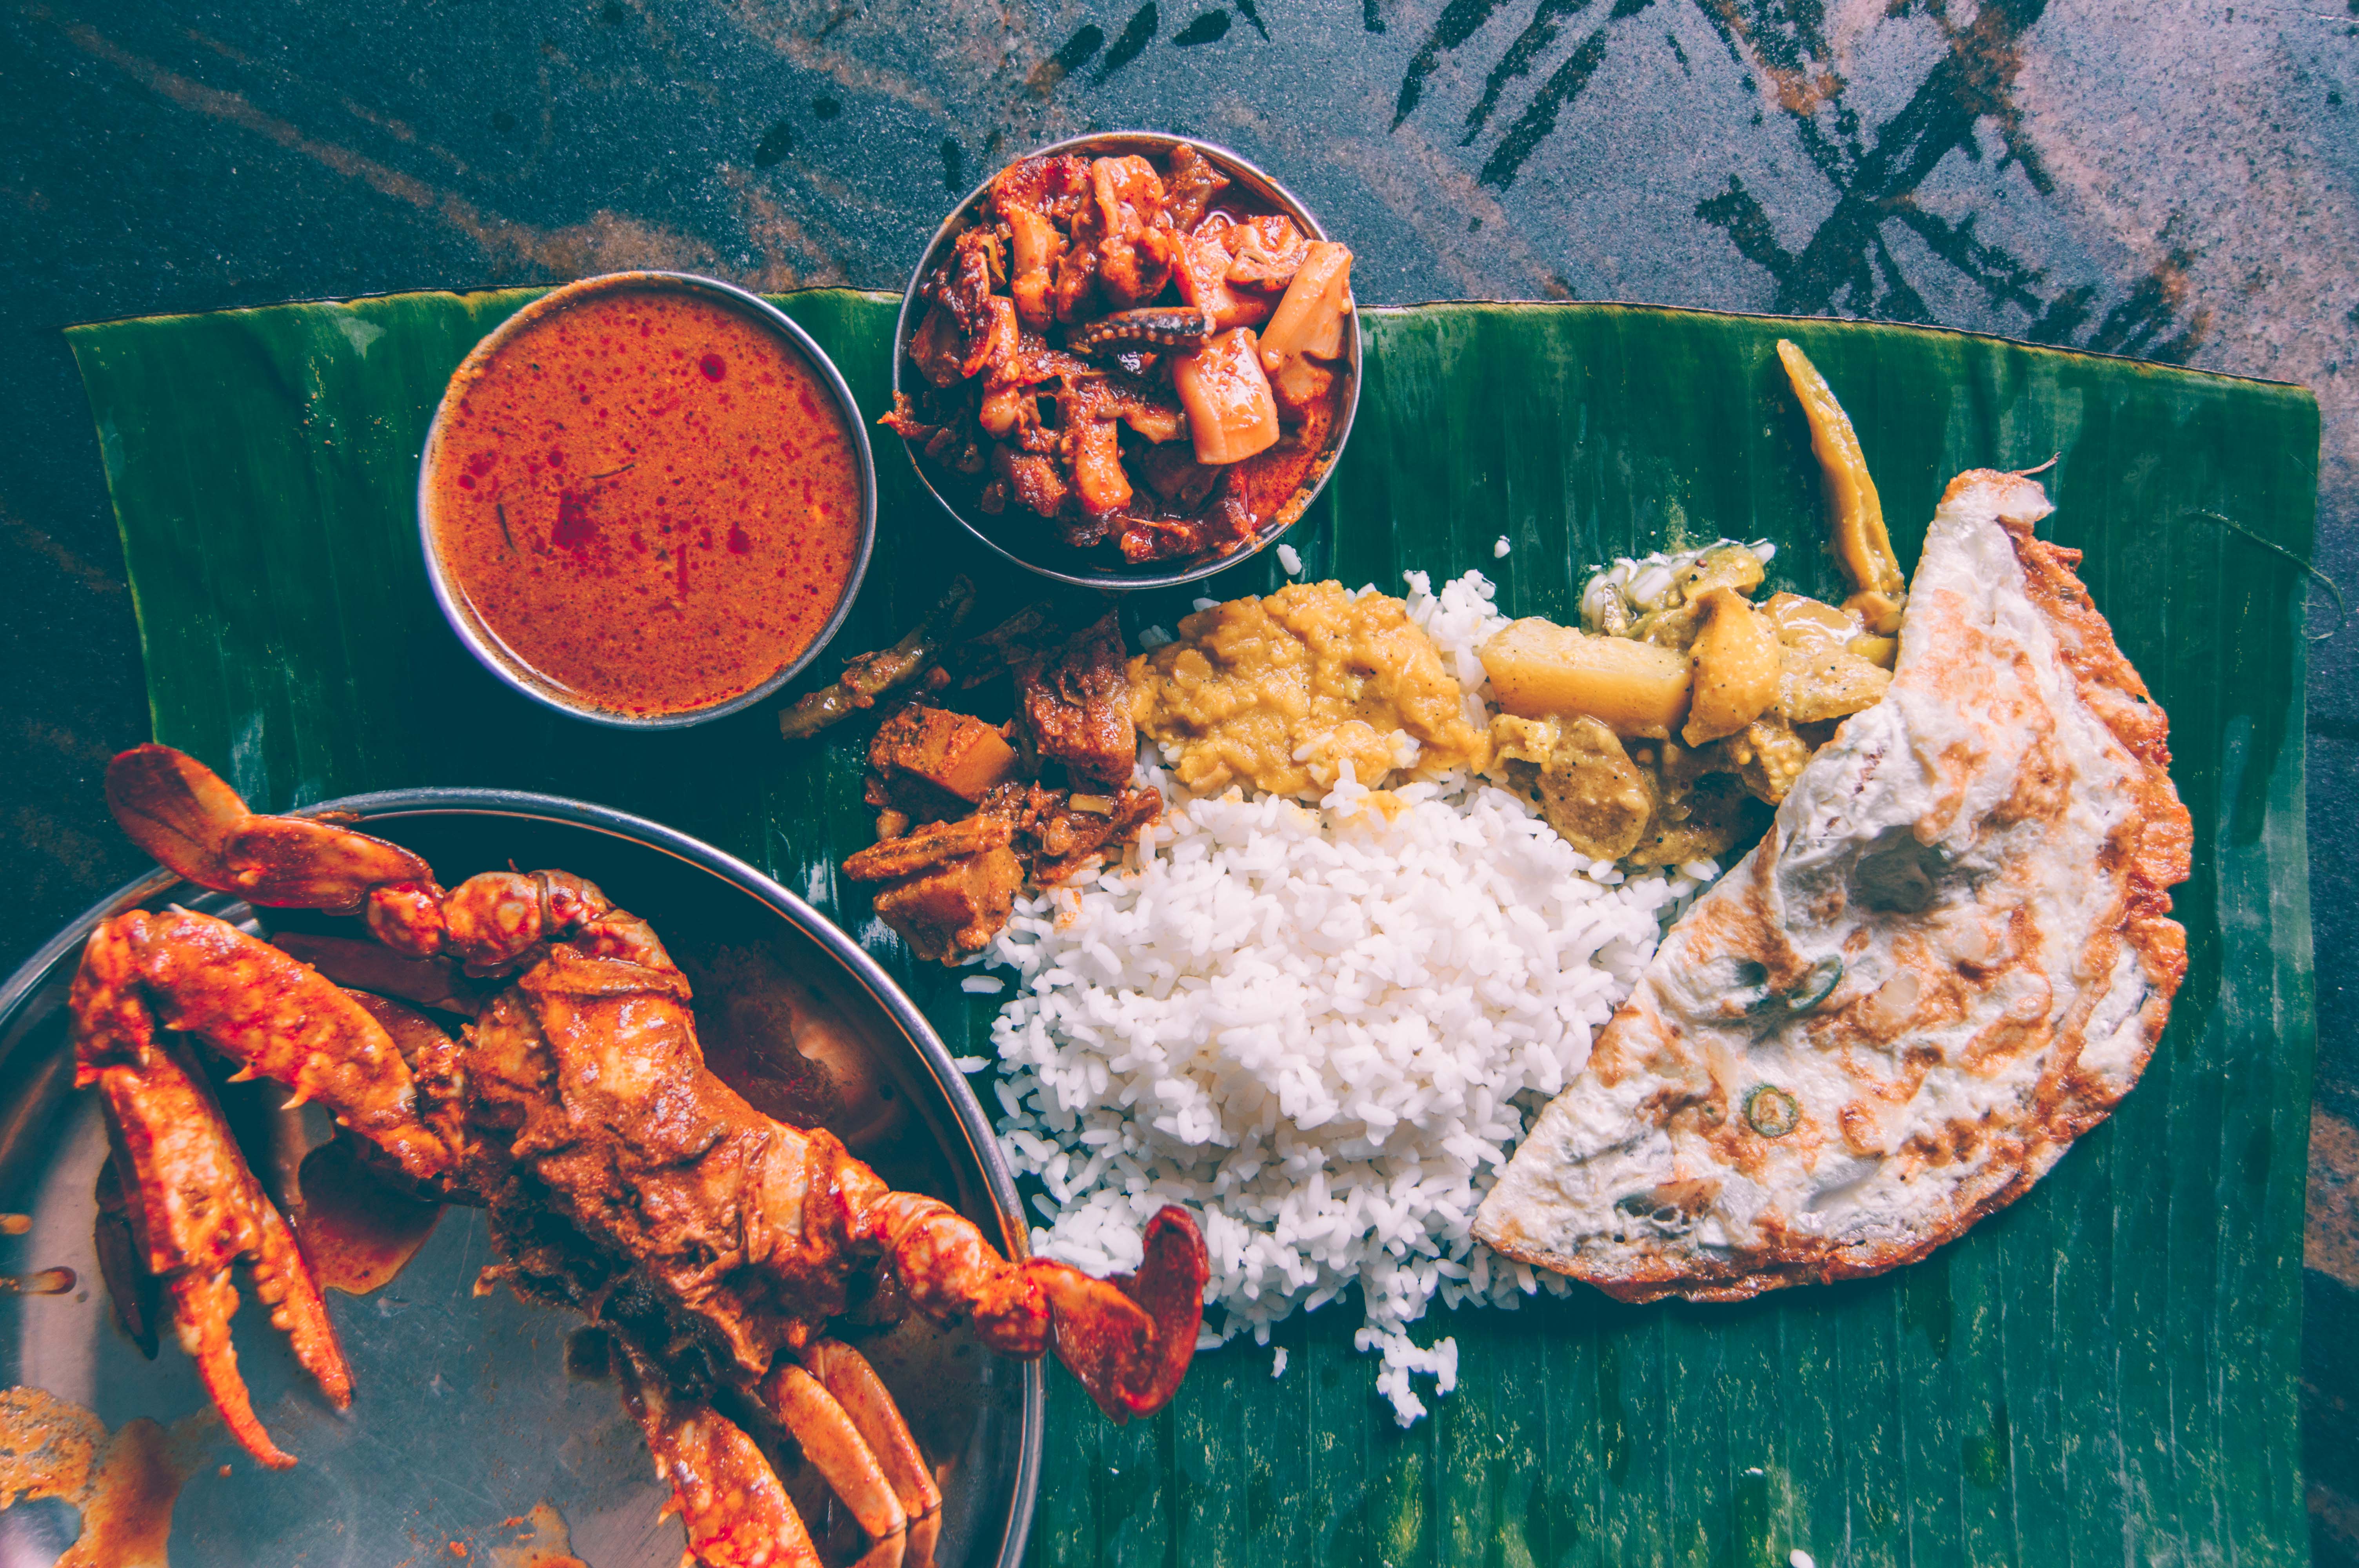 15 Best Restaurants Serving Sri Lankan Food In Colombo - 